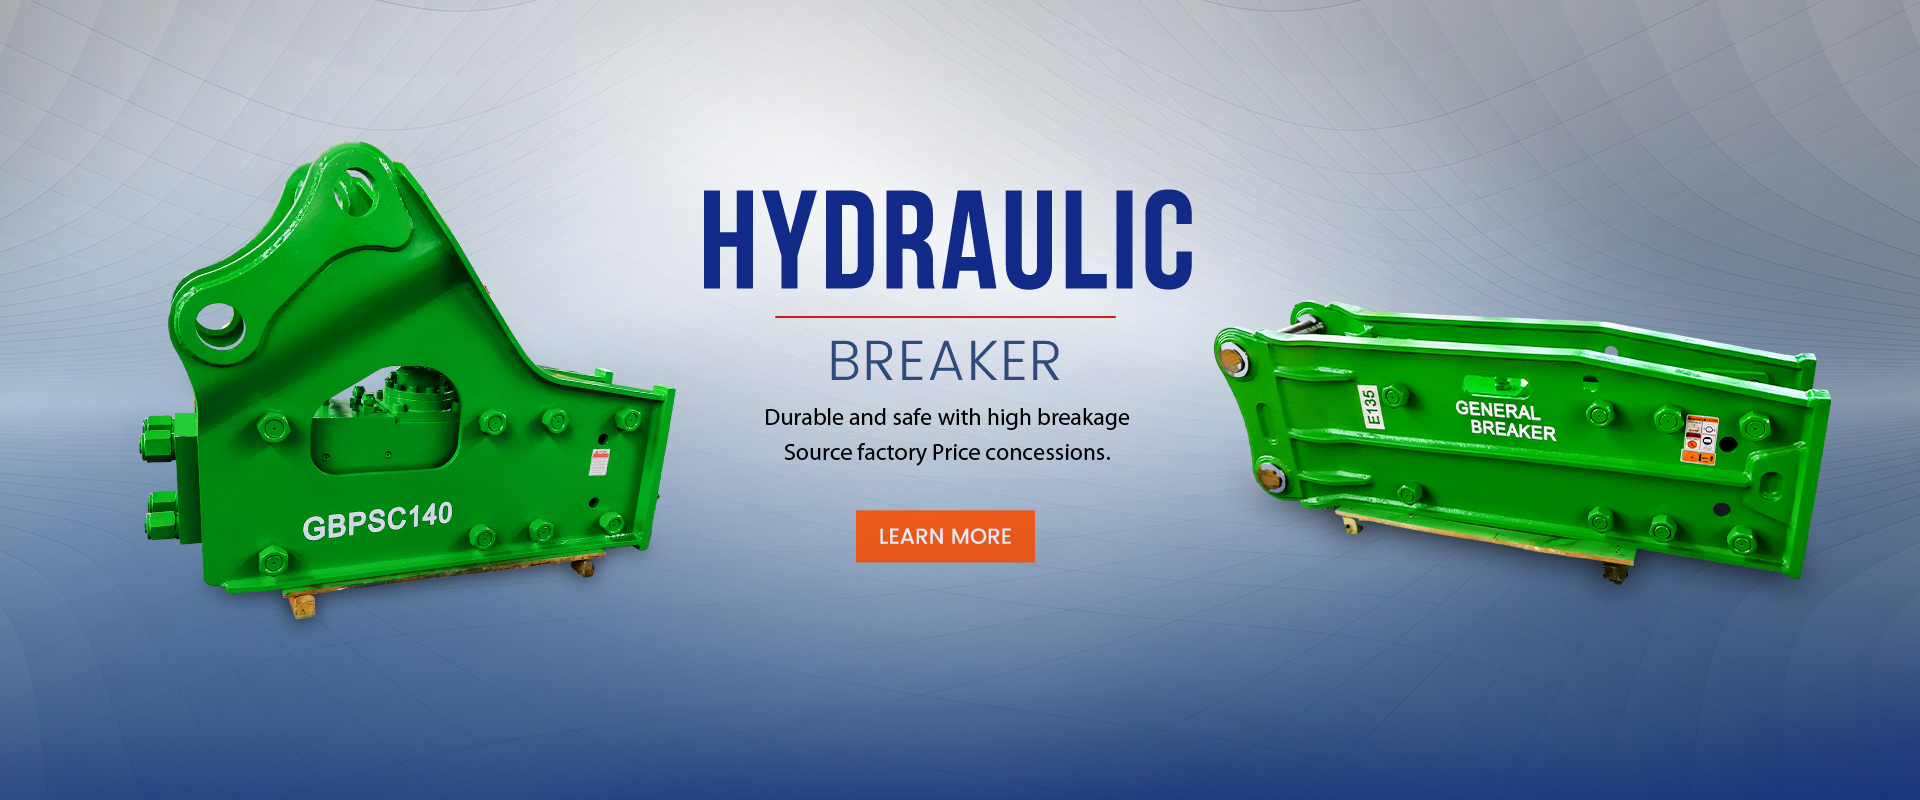 I-Hydraulic Breaker